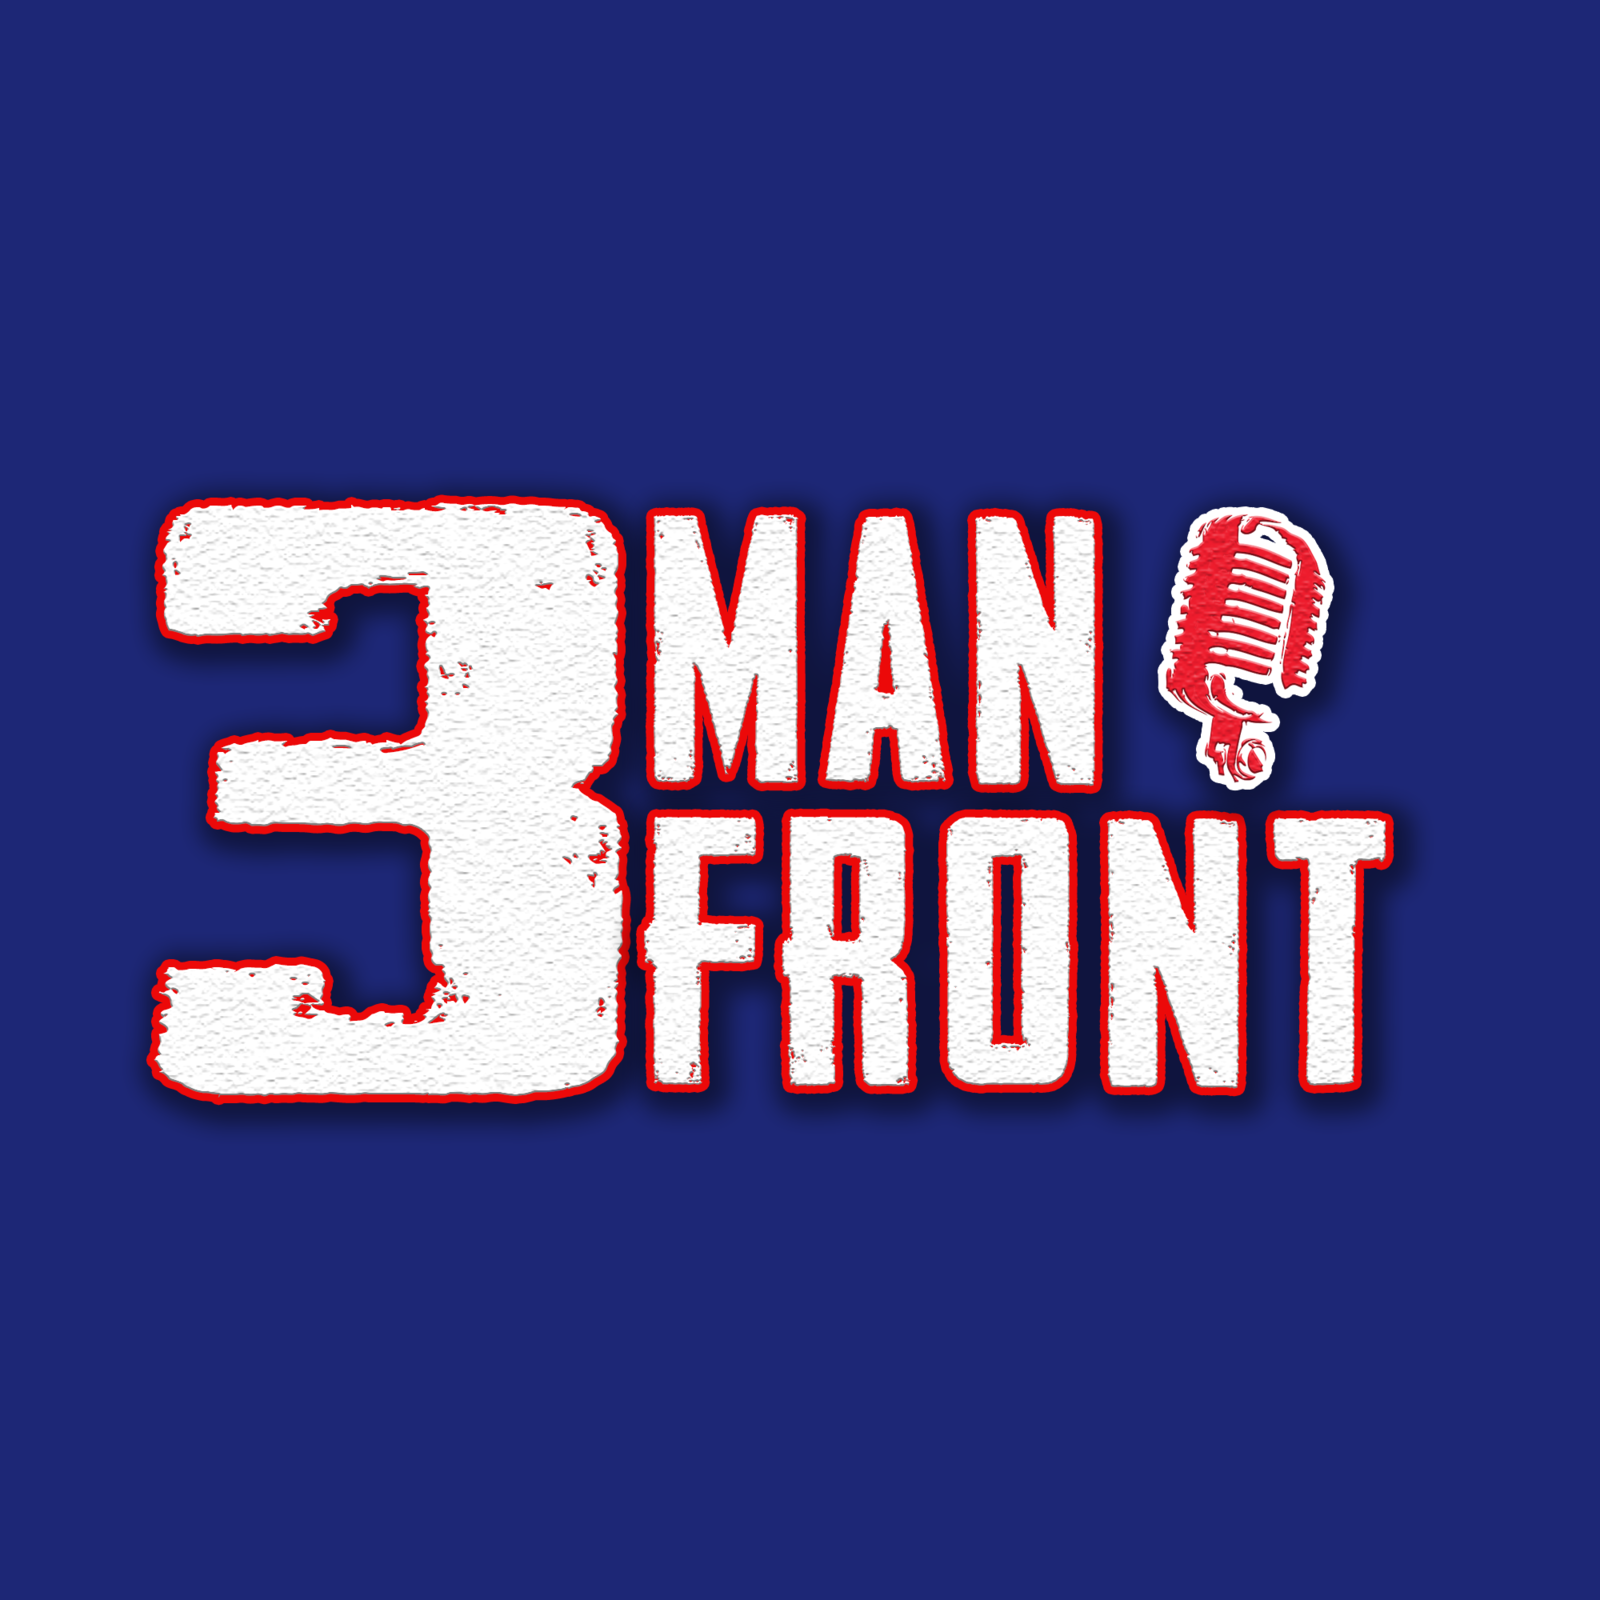 3 Man Front: J.P. Shadrick previews the NFL Draft